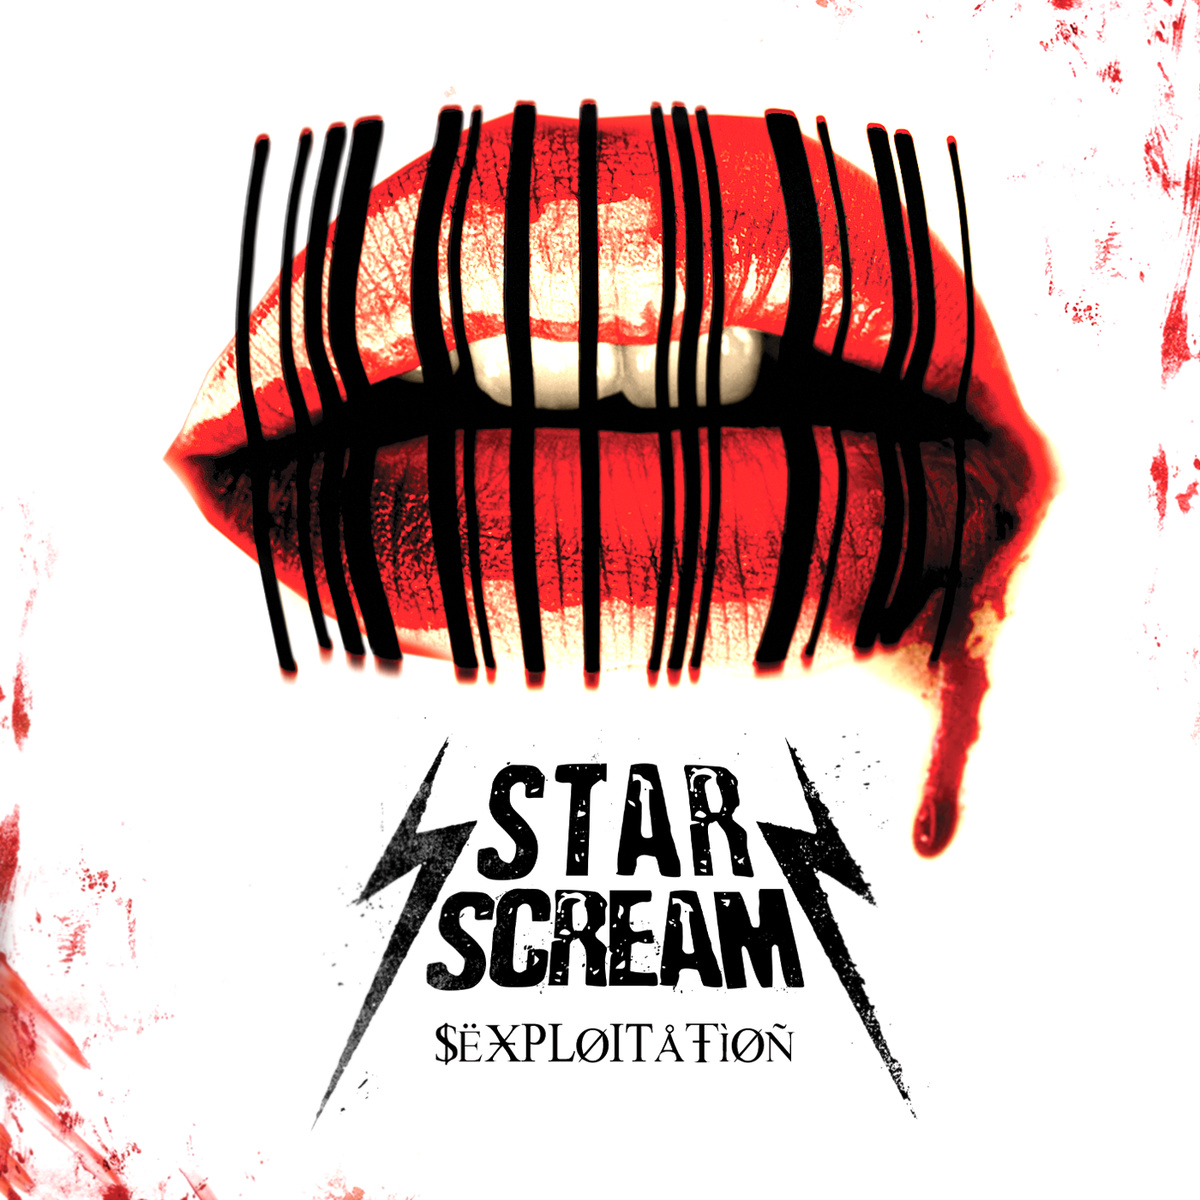 Tastes Like Rock -Star Scream - Sexploitation Review